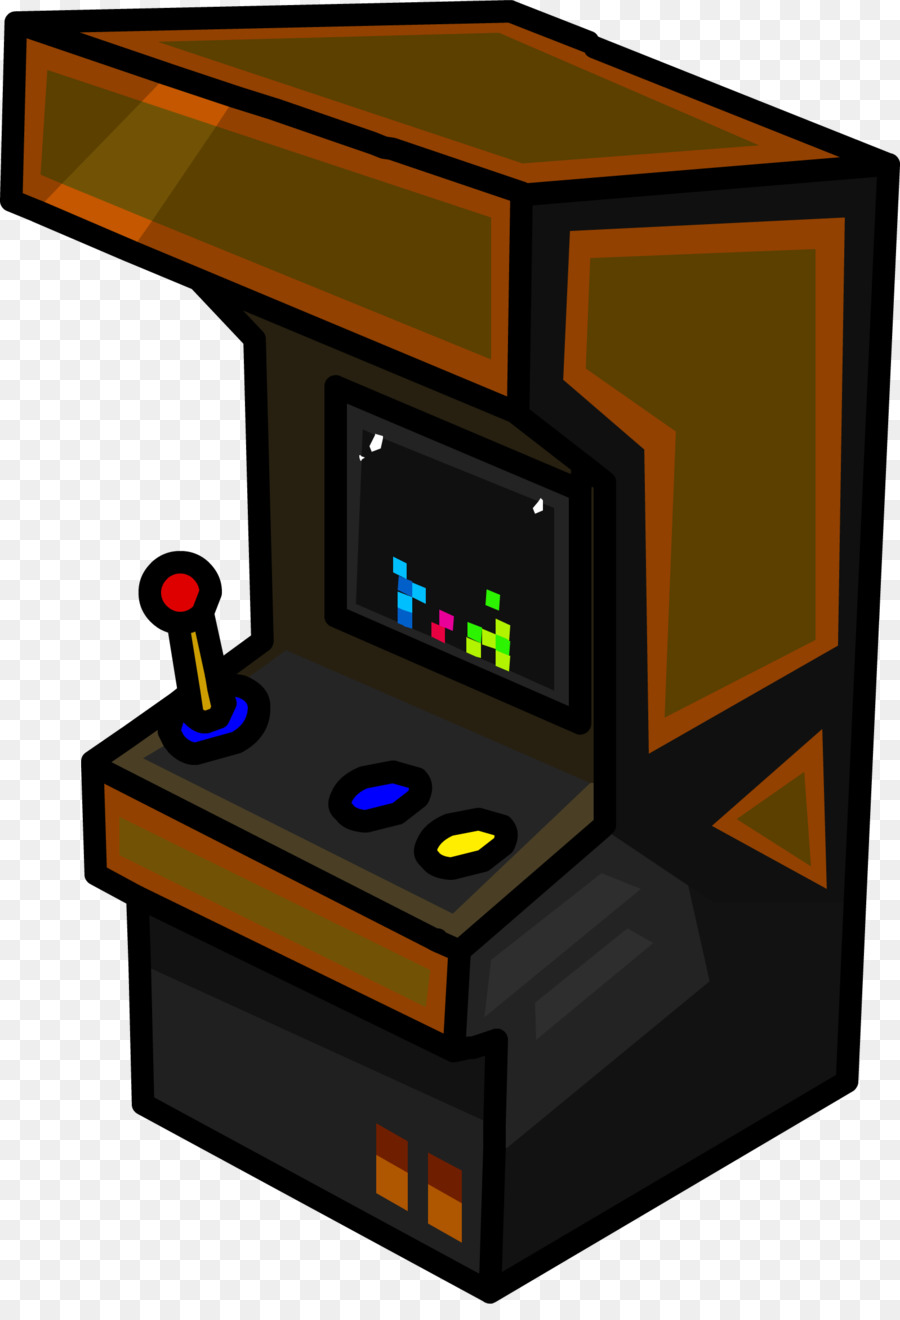 Club Penguin Arcade game Video game Amusement arcade Pong - donkey kong png download - 1598*2315 - Free Transparent Club Penguin png Download.